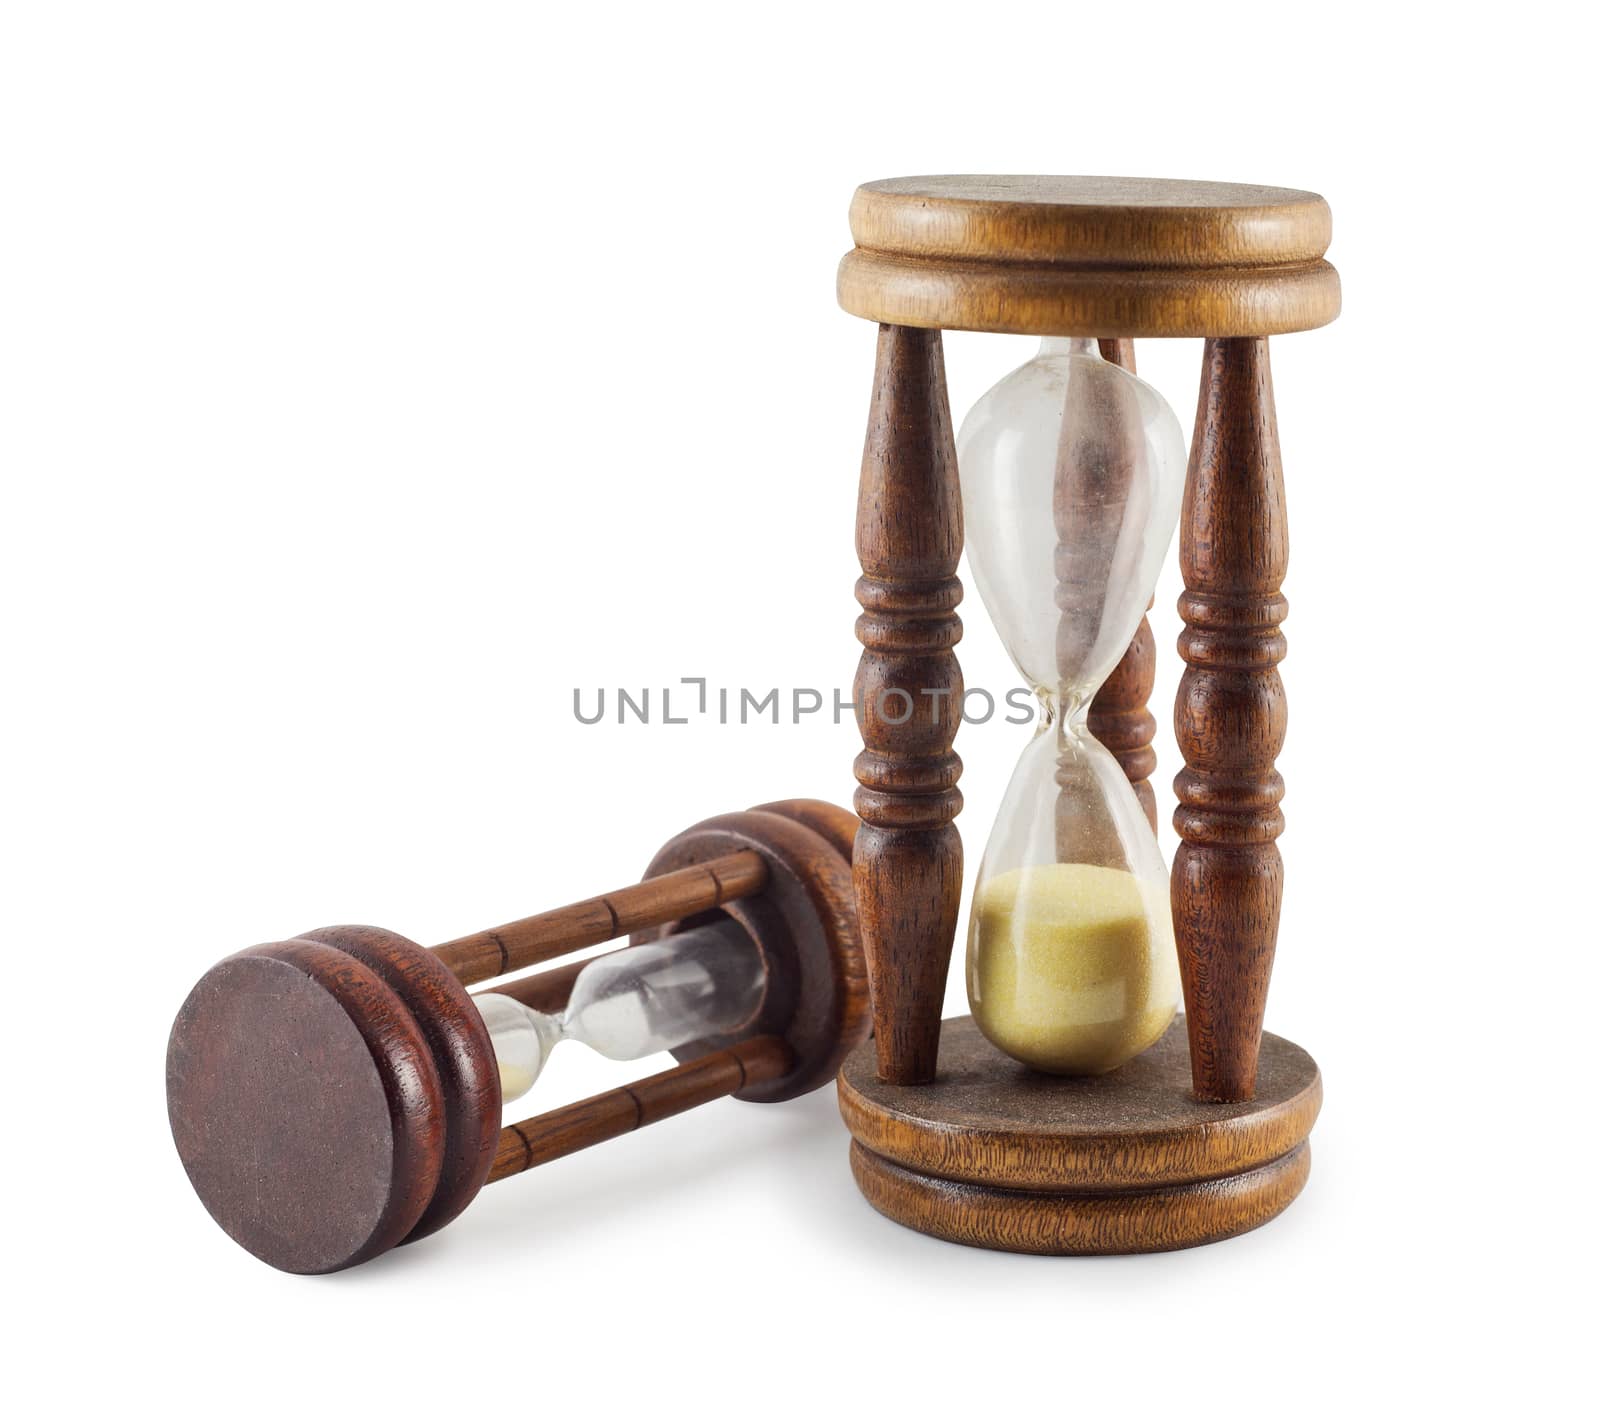 Wooden Sandglass. by jayzynism